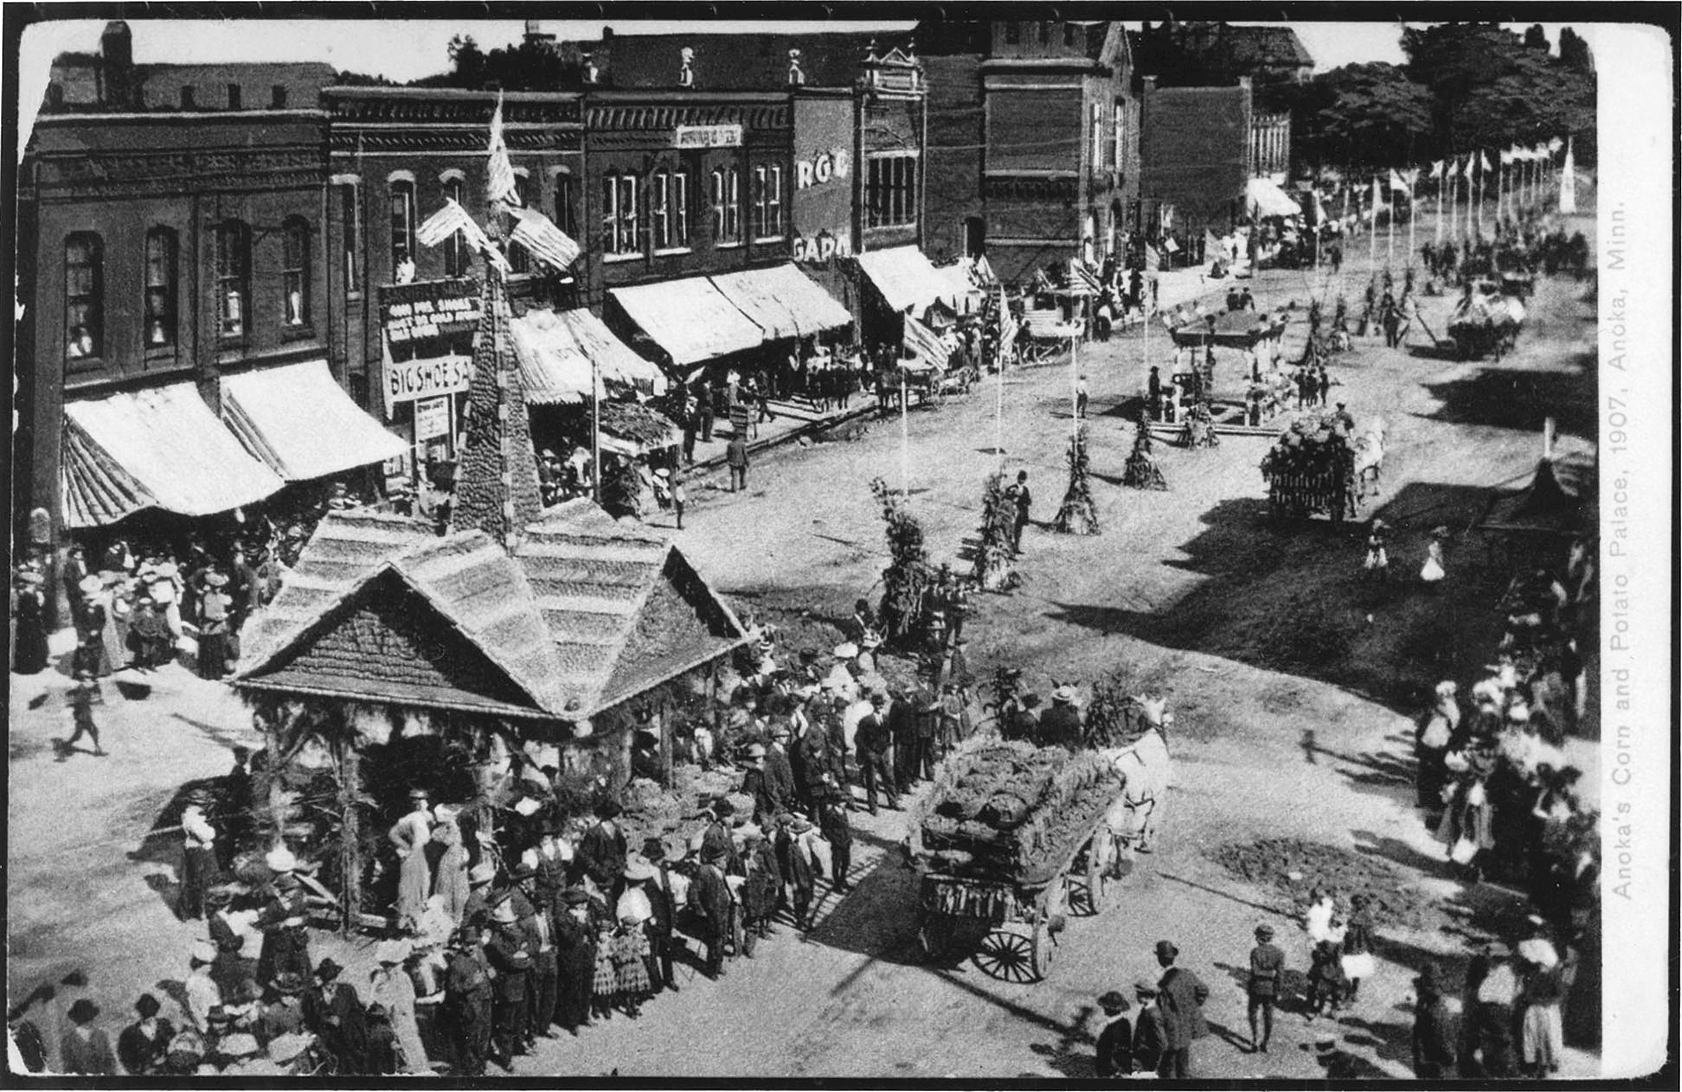 1907 harvest festival in Anoka, MN.